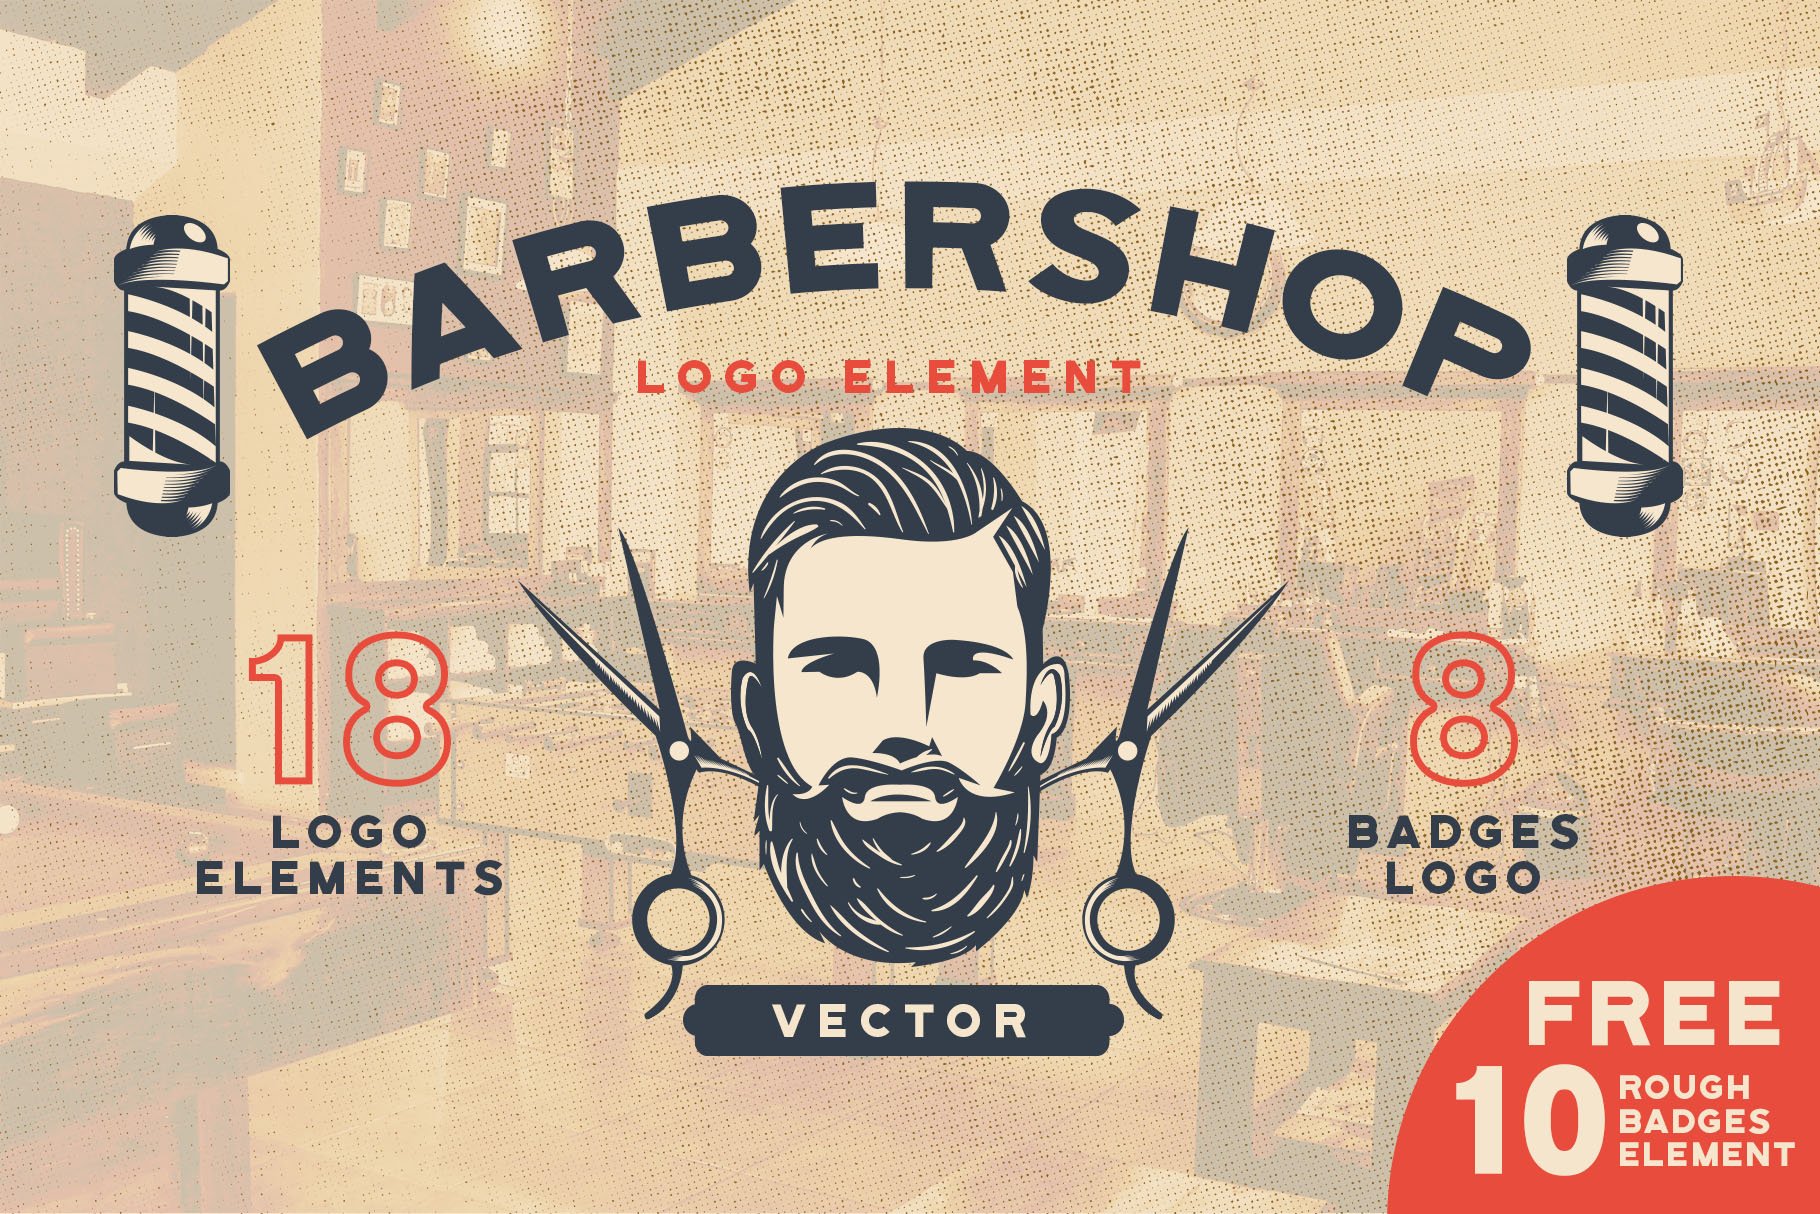 Barbershop Logo Elements Vector cover image.